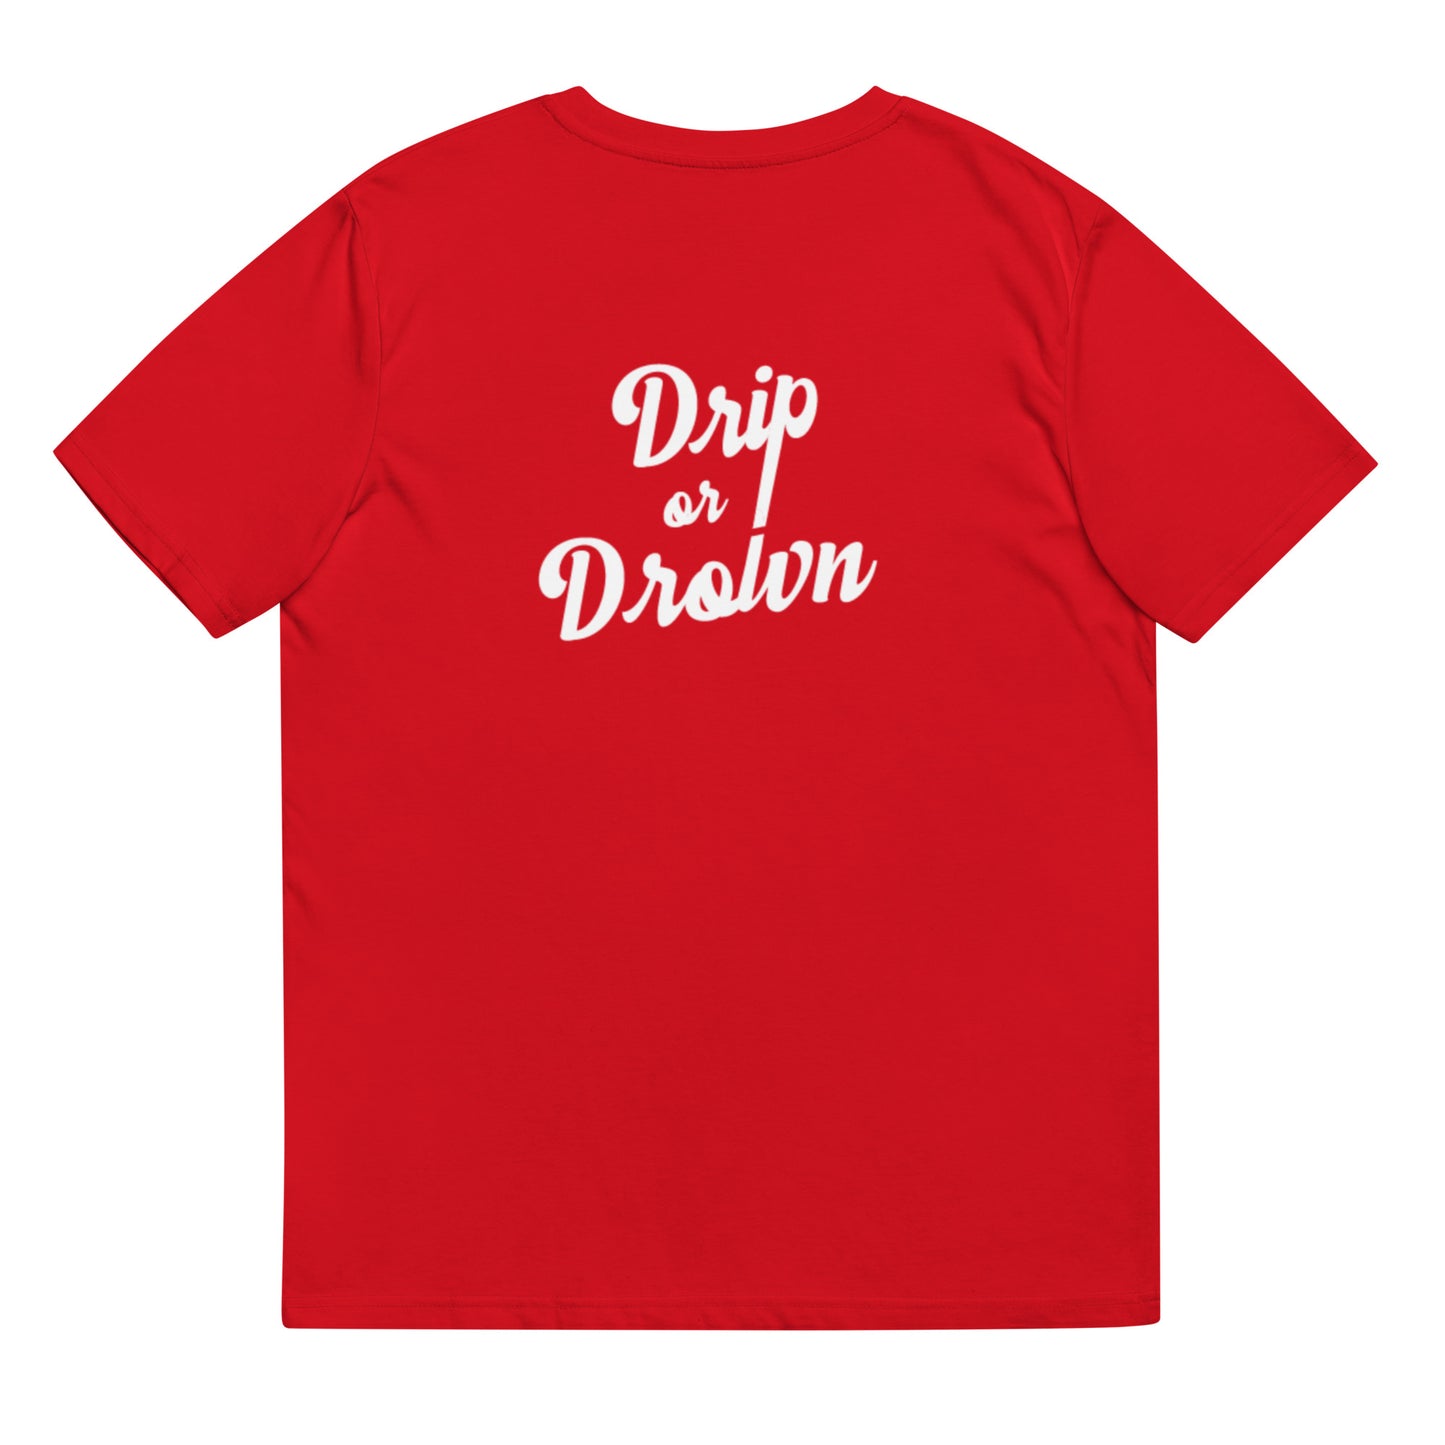 Droplet T-shirt